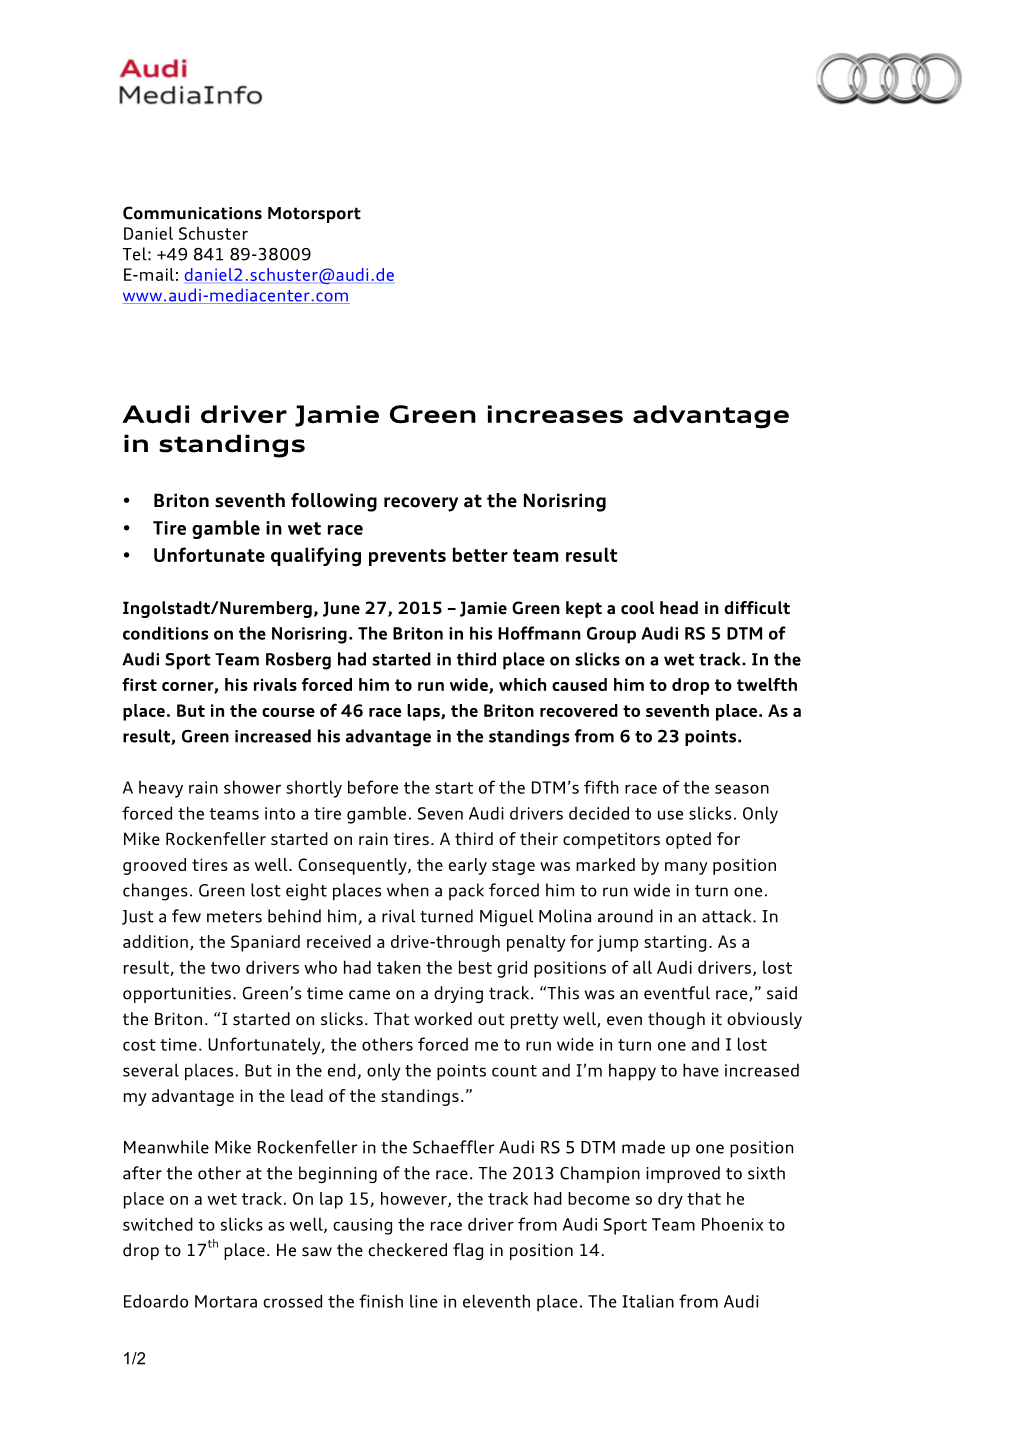 Audi Driver Jamie Green Increases Advantage in Standings